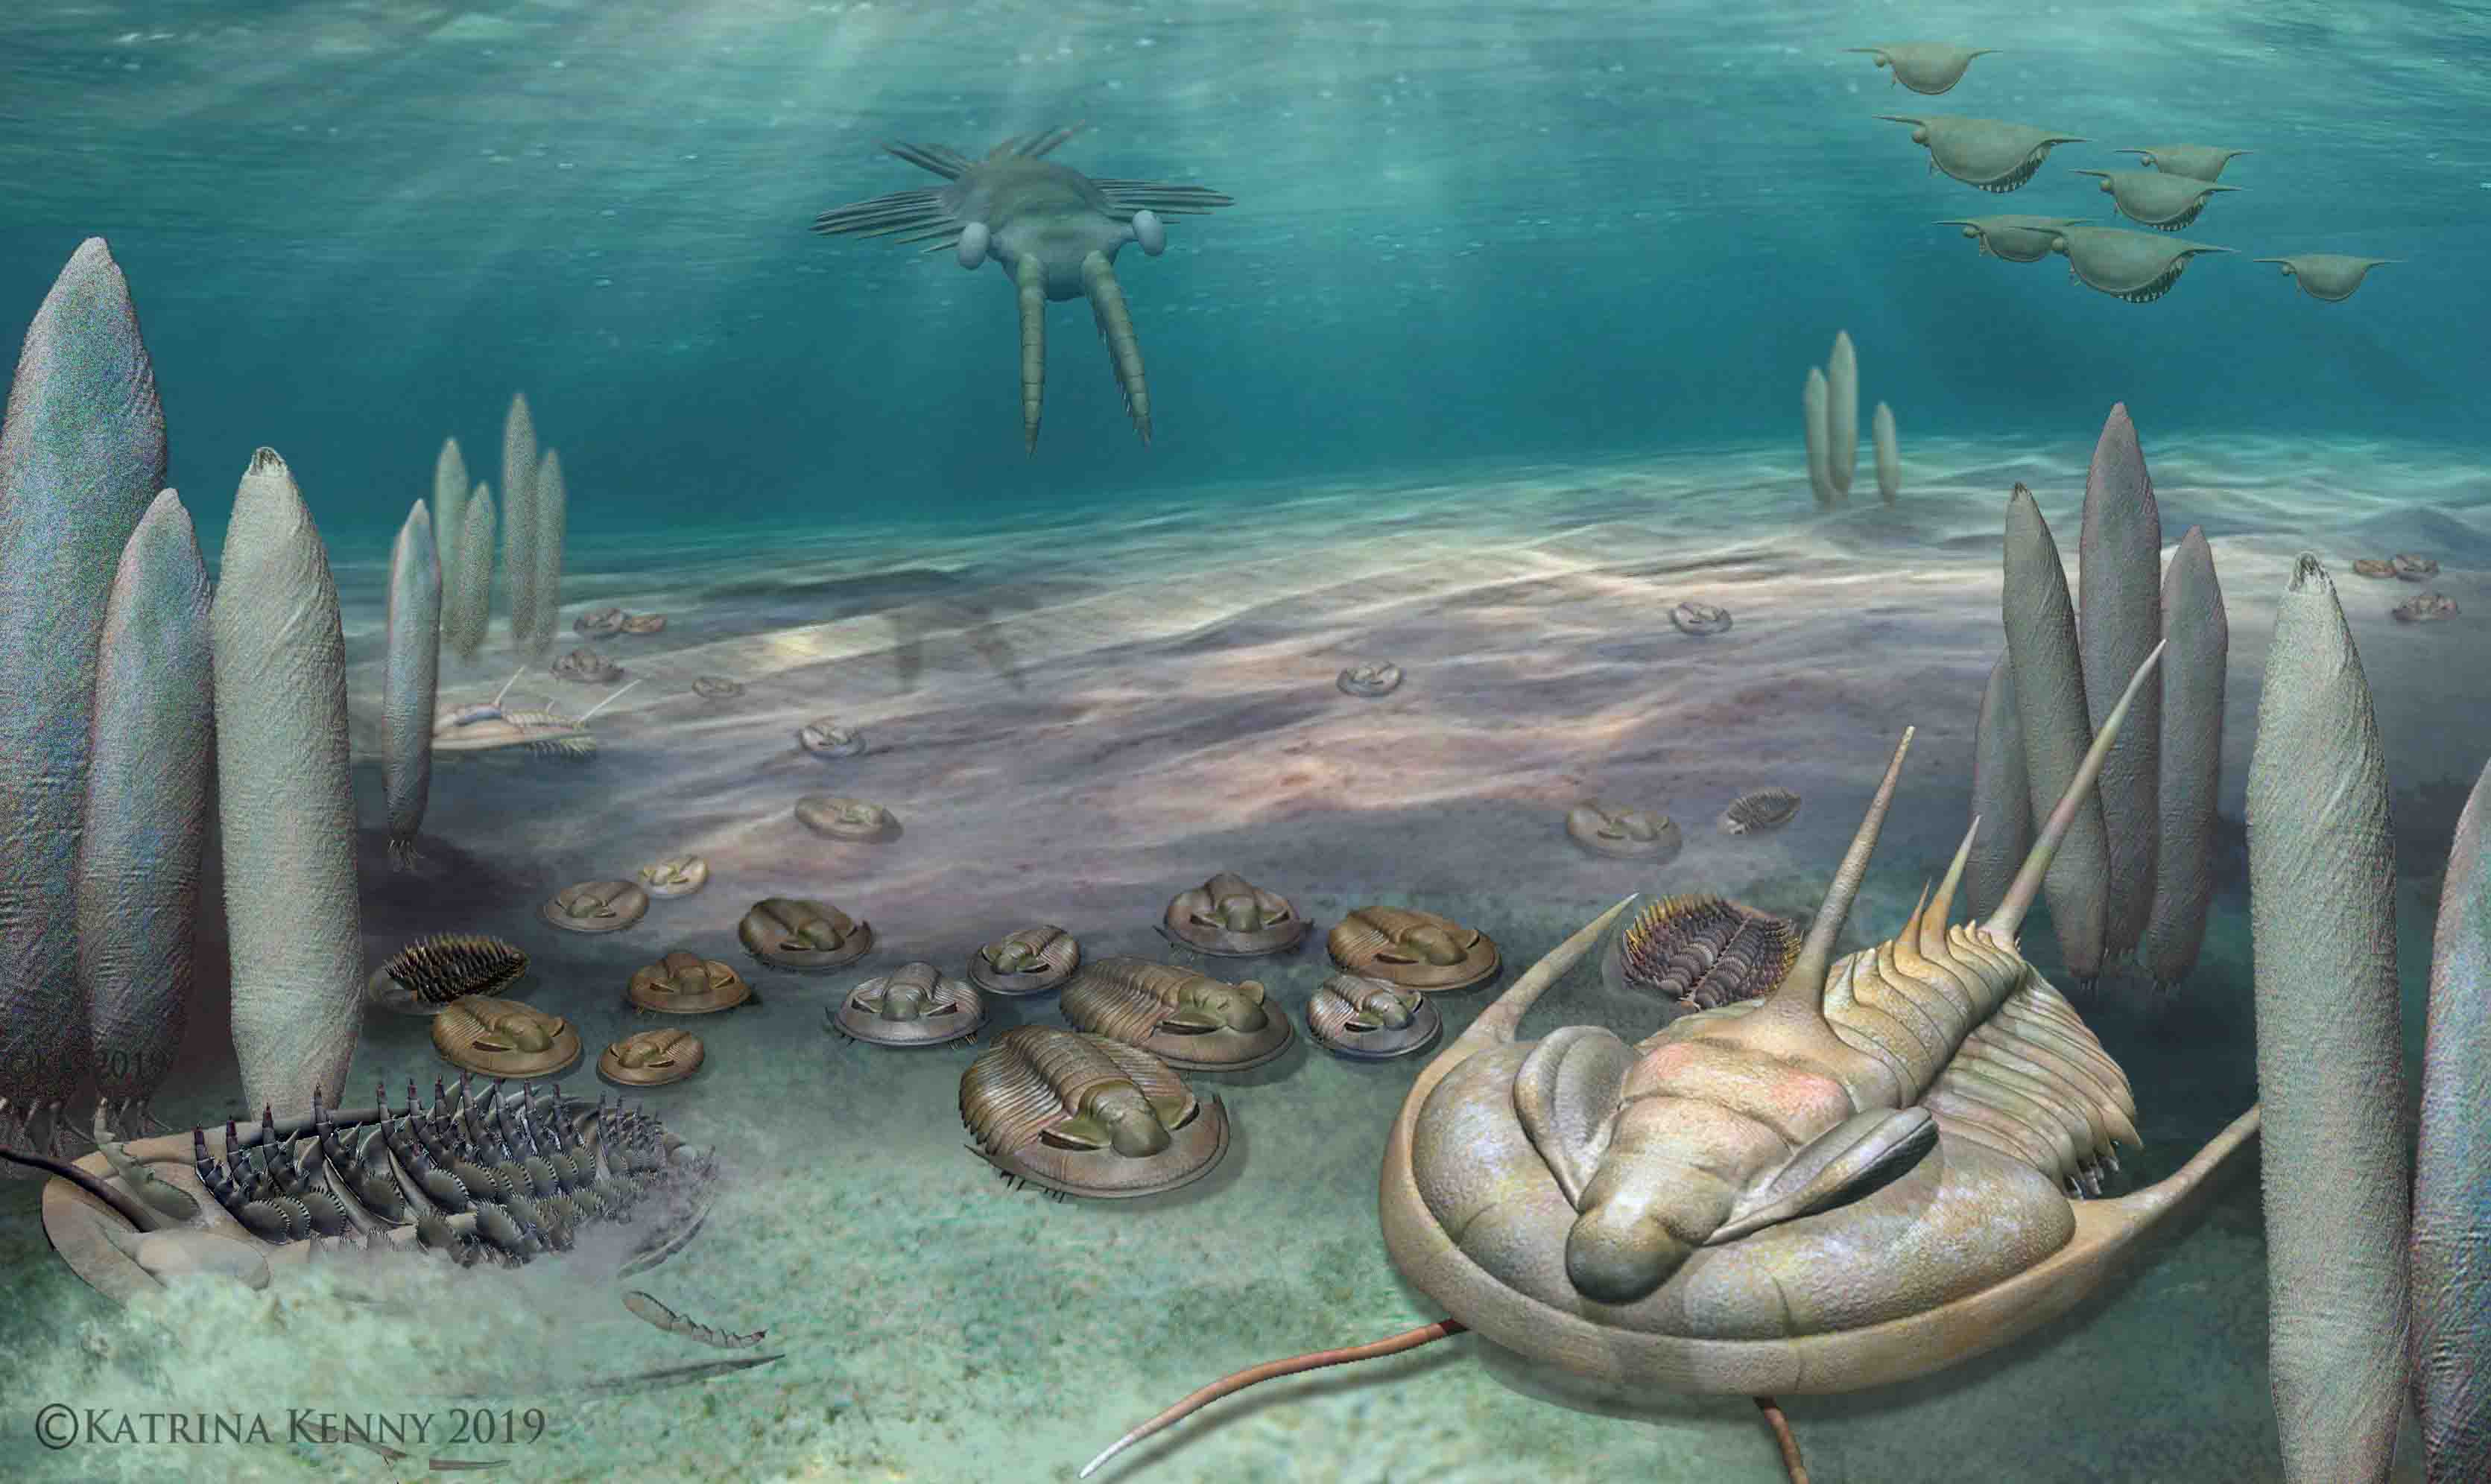 https://www.une.edu.au/__data/assets/image/0005/257162/Cambrian-seascape-with-trilobites-Credit-Katrina-Kenny_online_version.jpg